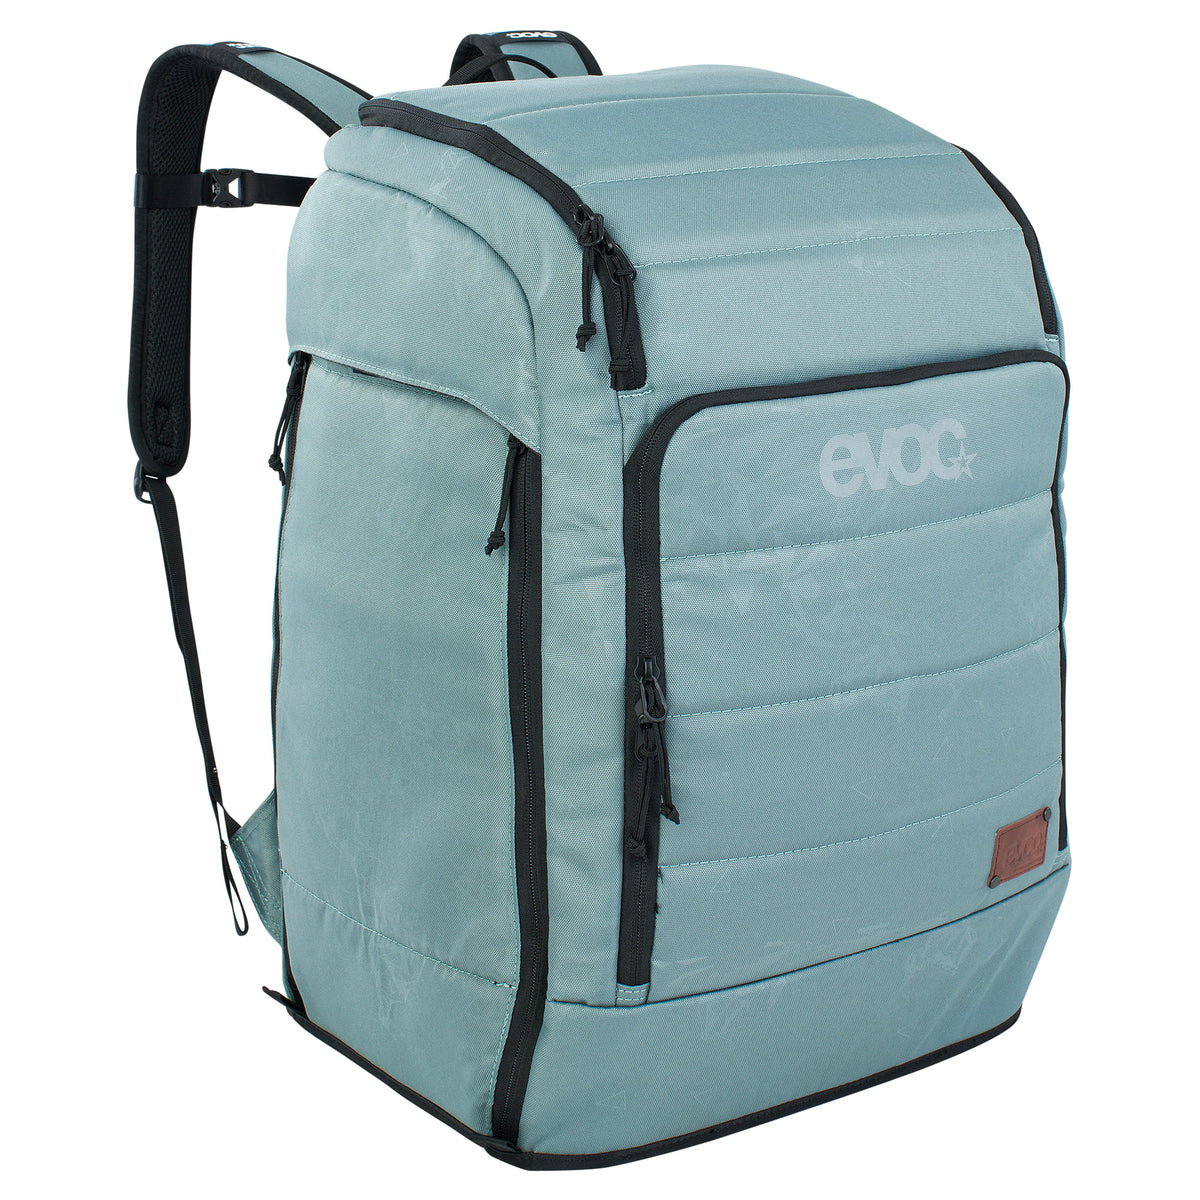 Evoc Gear Backpack 60L